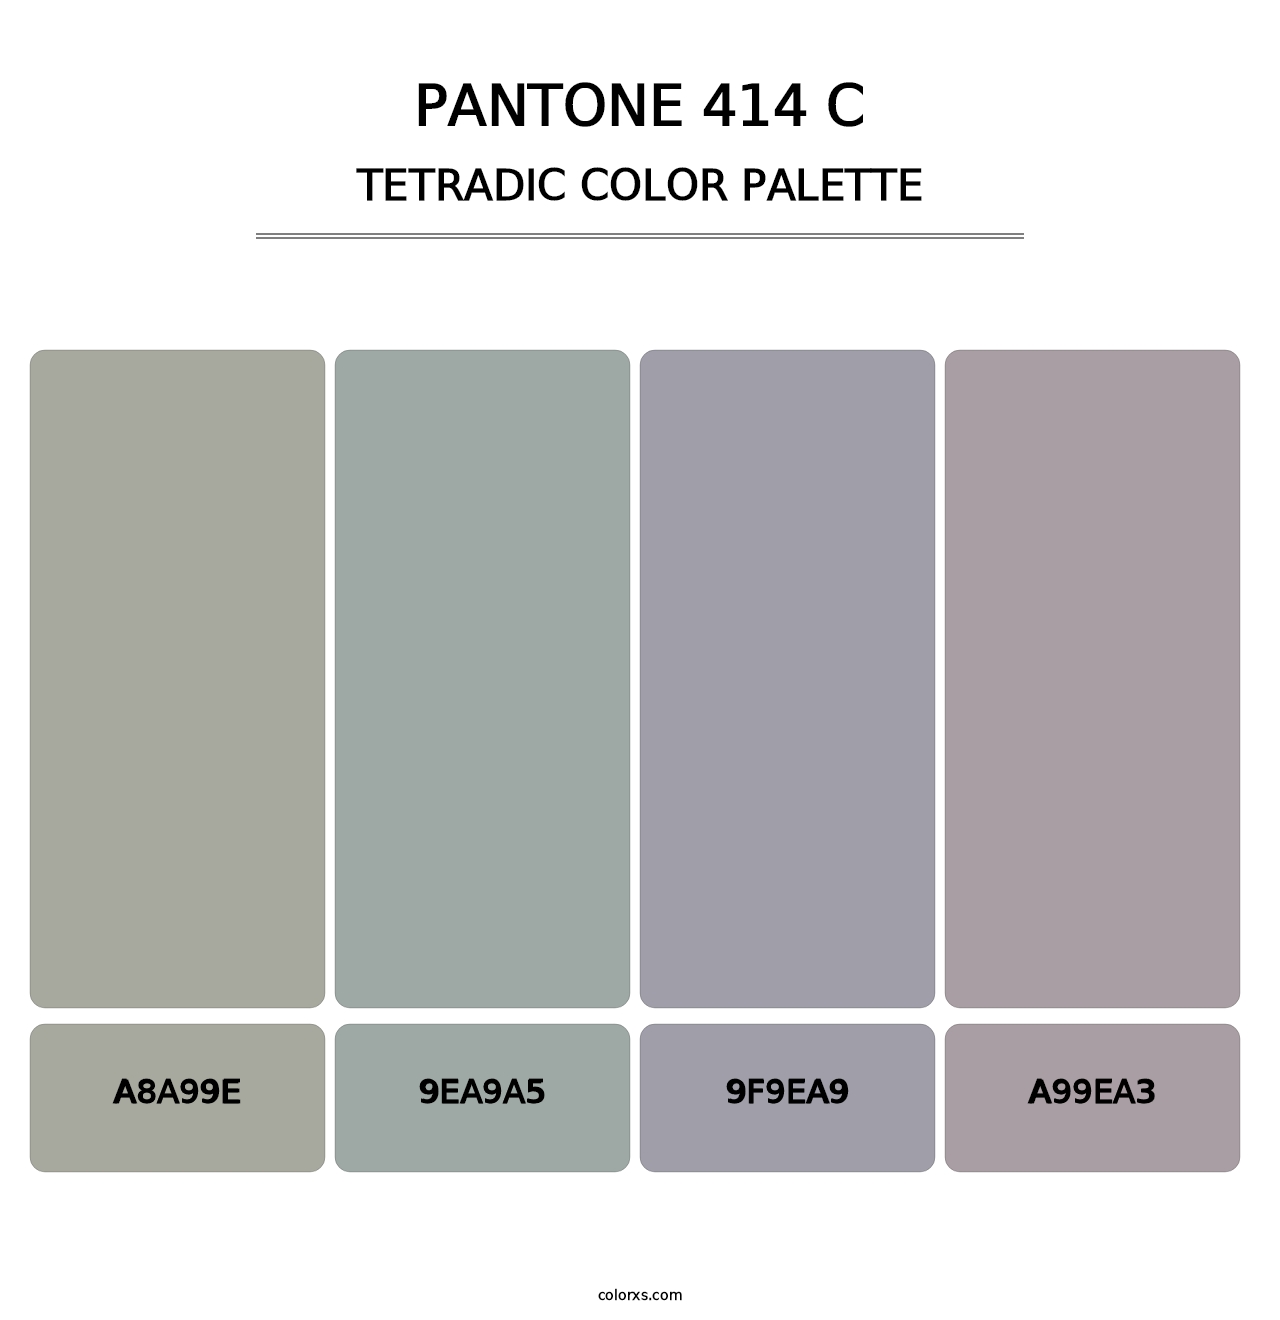 PANTONE 414 C - Tetradic Color Palette